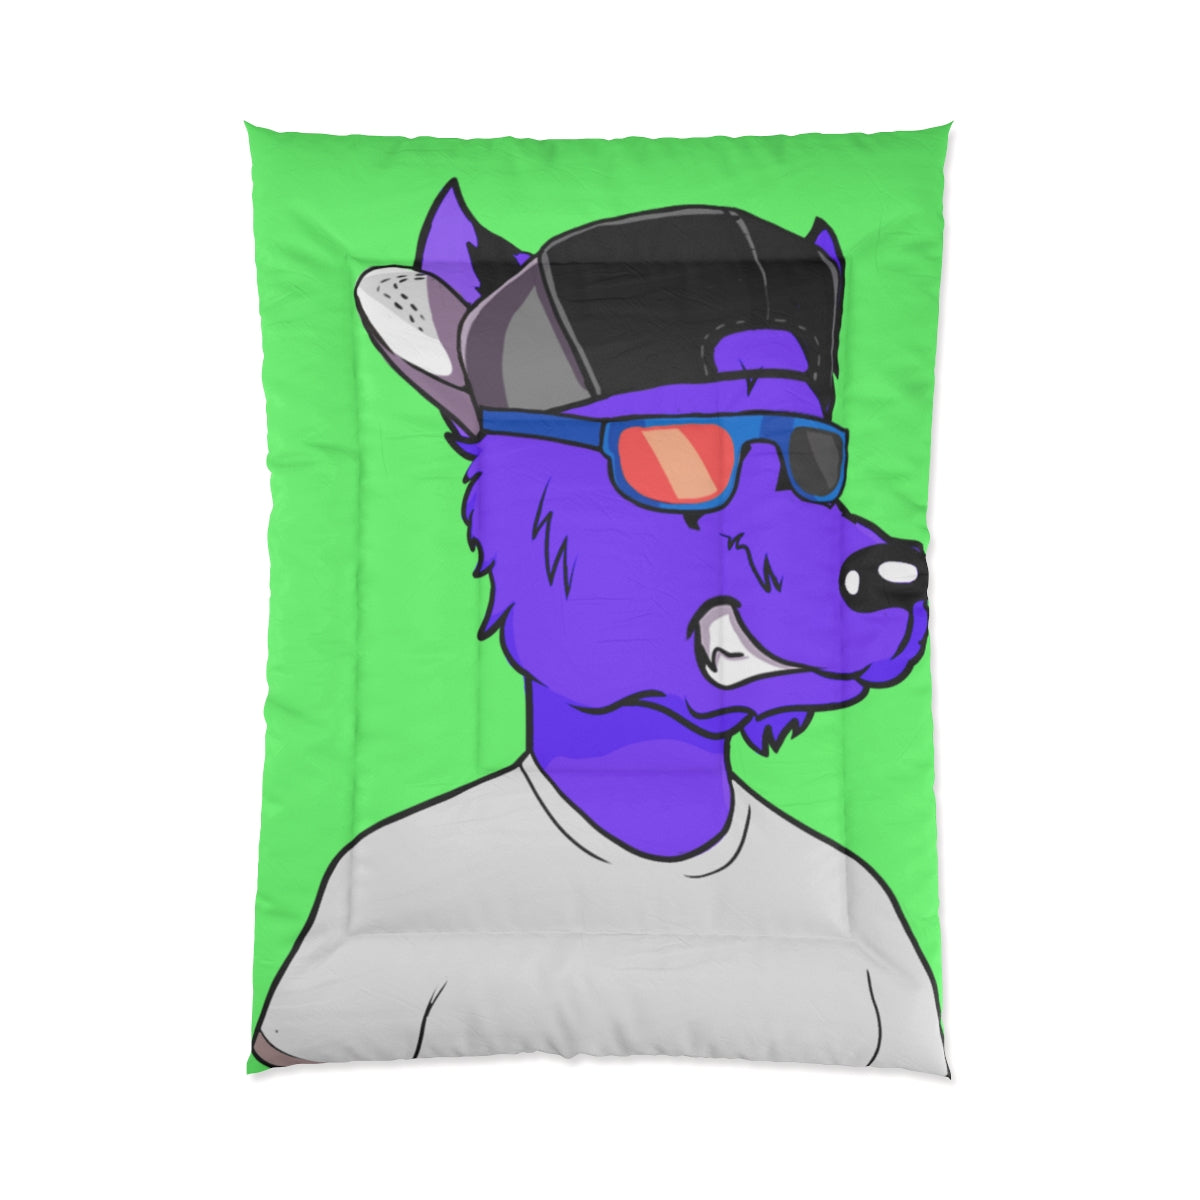 Cyborg Wolf Purple Fur Sunglasses Shades Cool Hat White Tshirt Bed Comforter